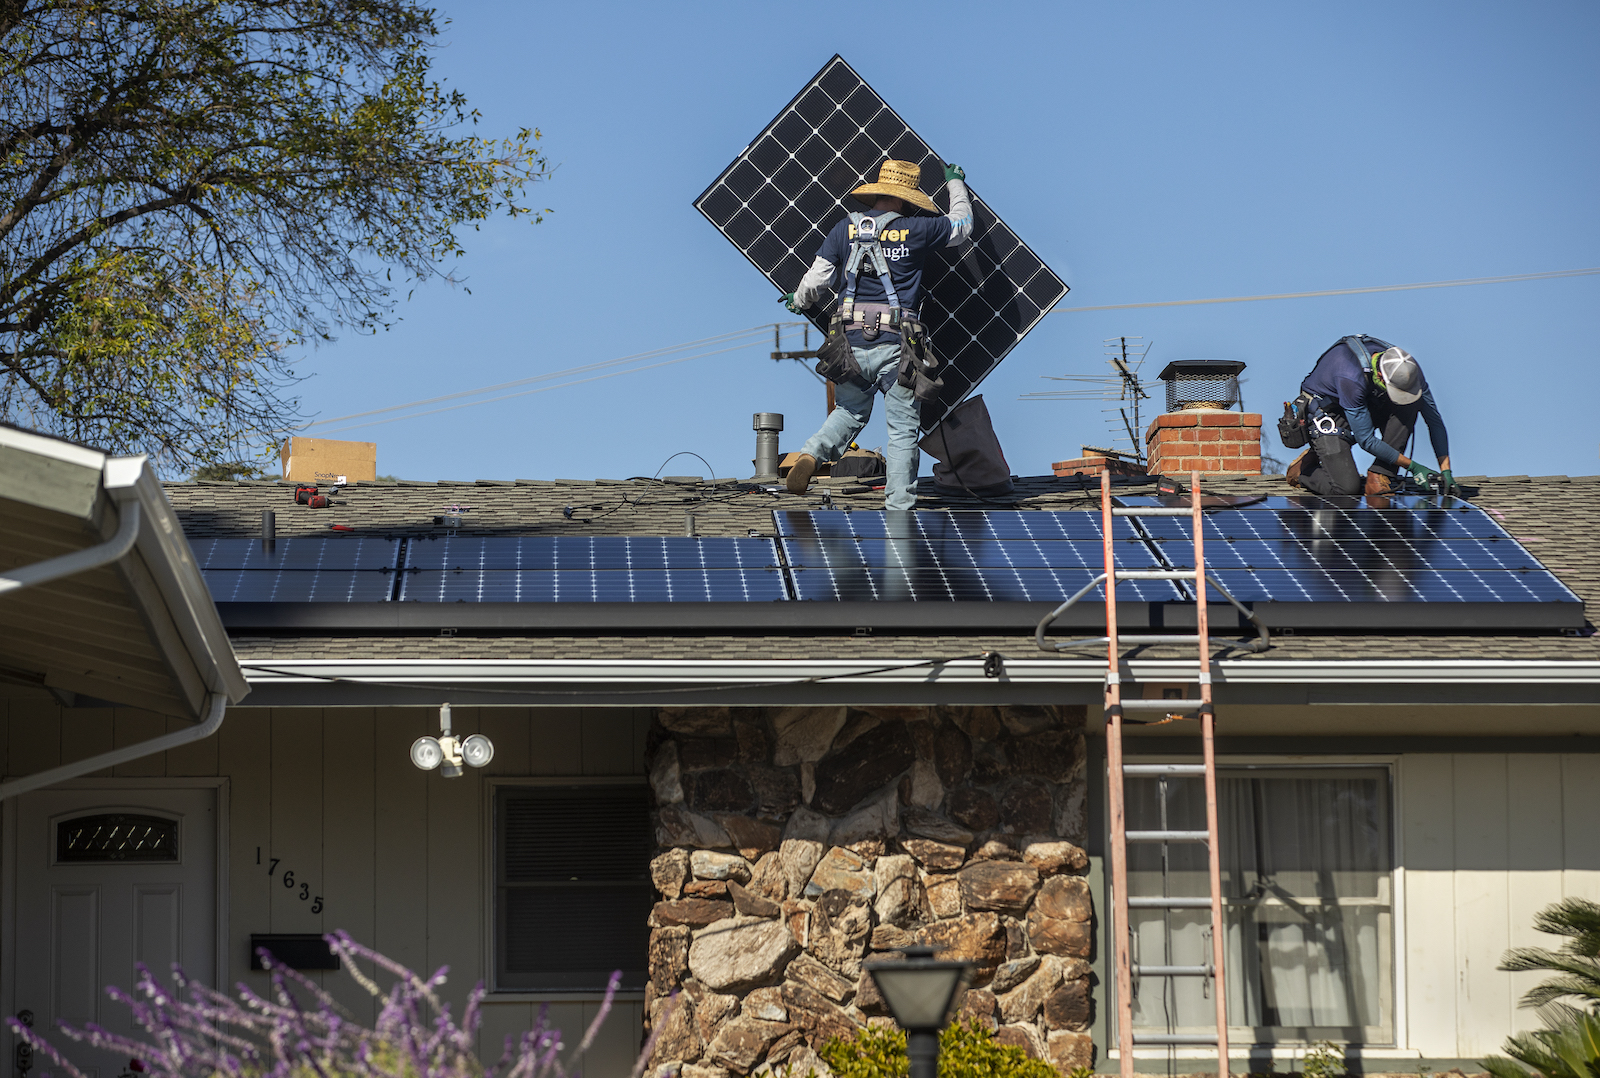 Two workmen install solar panels on a suburban house.